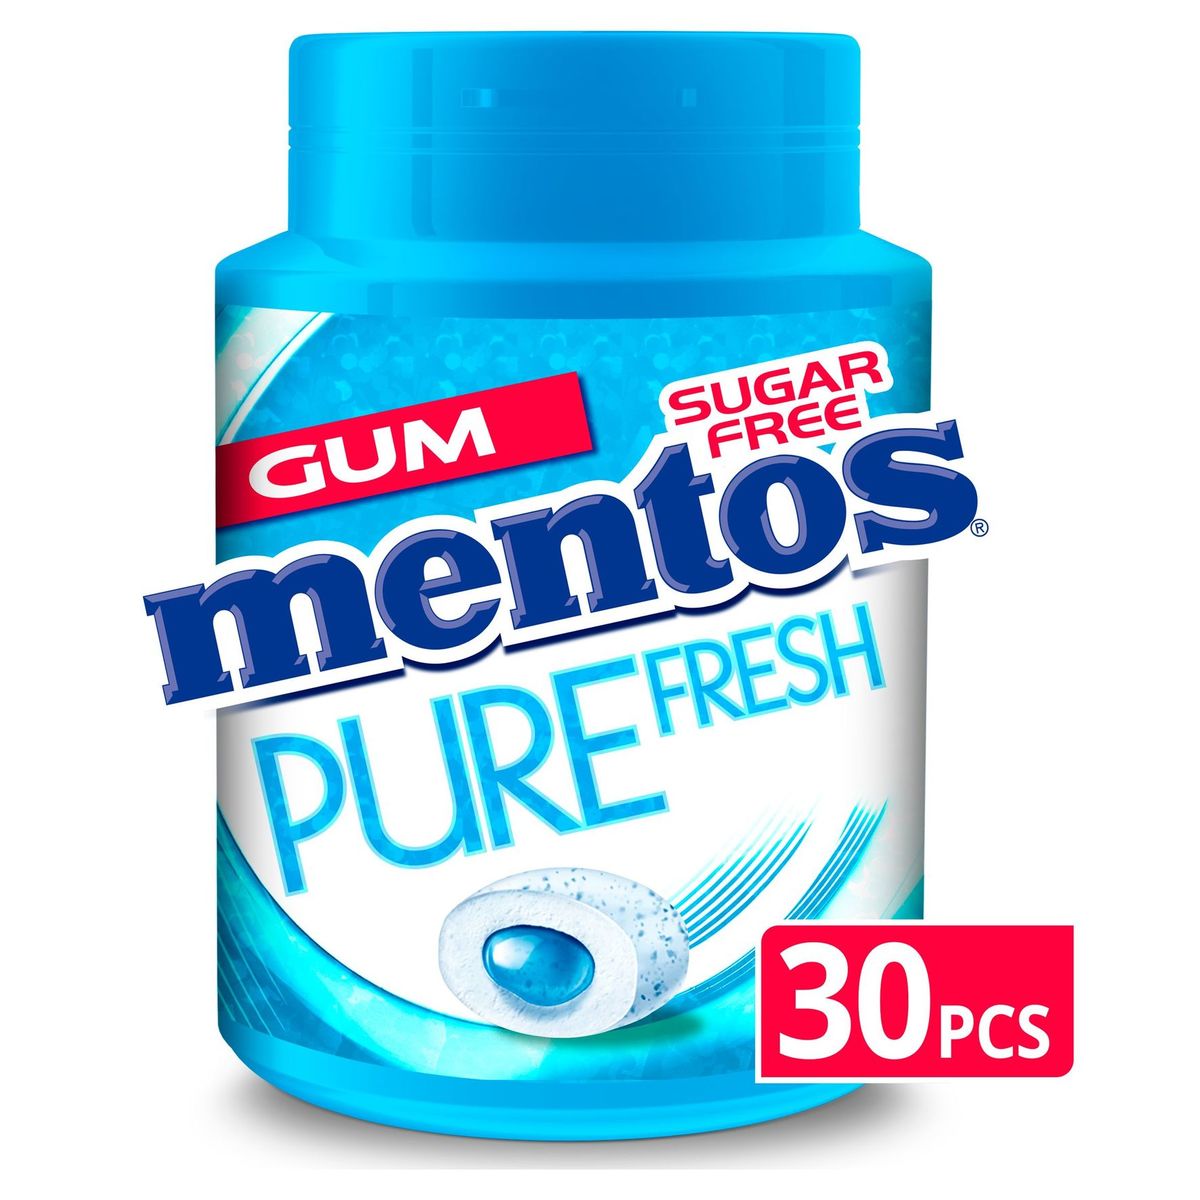 Mentos Chewing Gum Pure Fresh Mint - with Green Tea 30 Stuks 60g